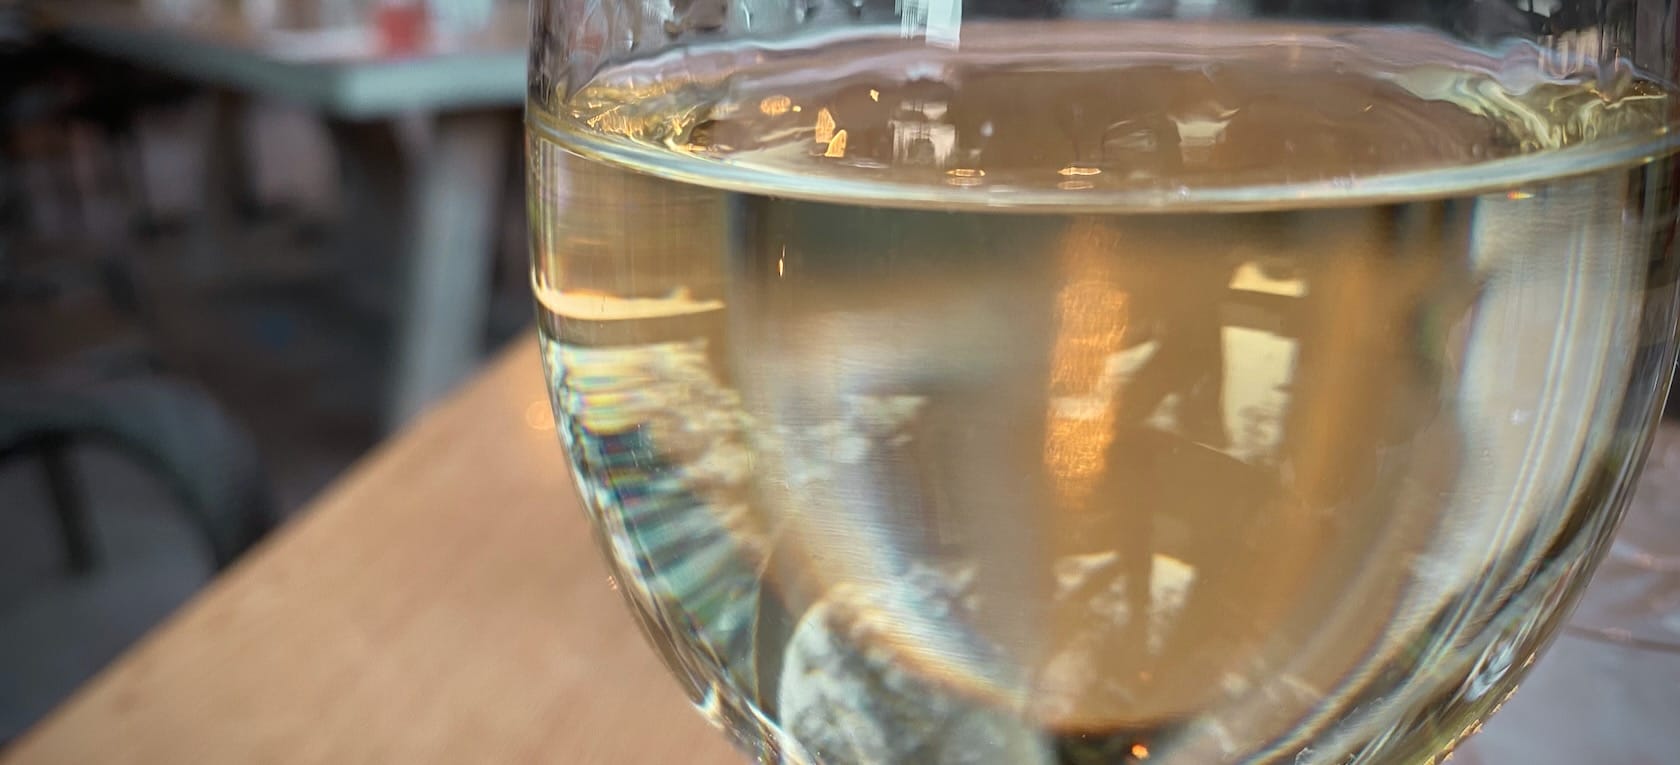 A closeup on a glass of white wine